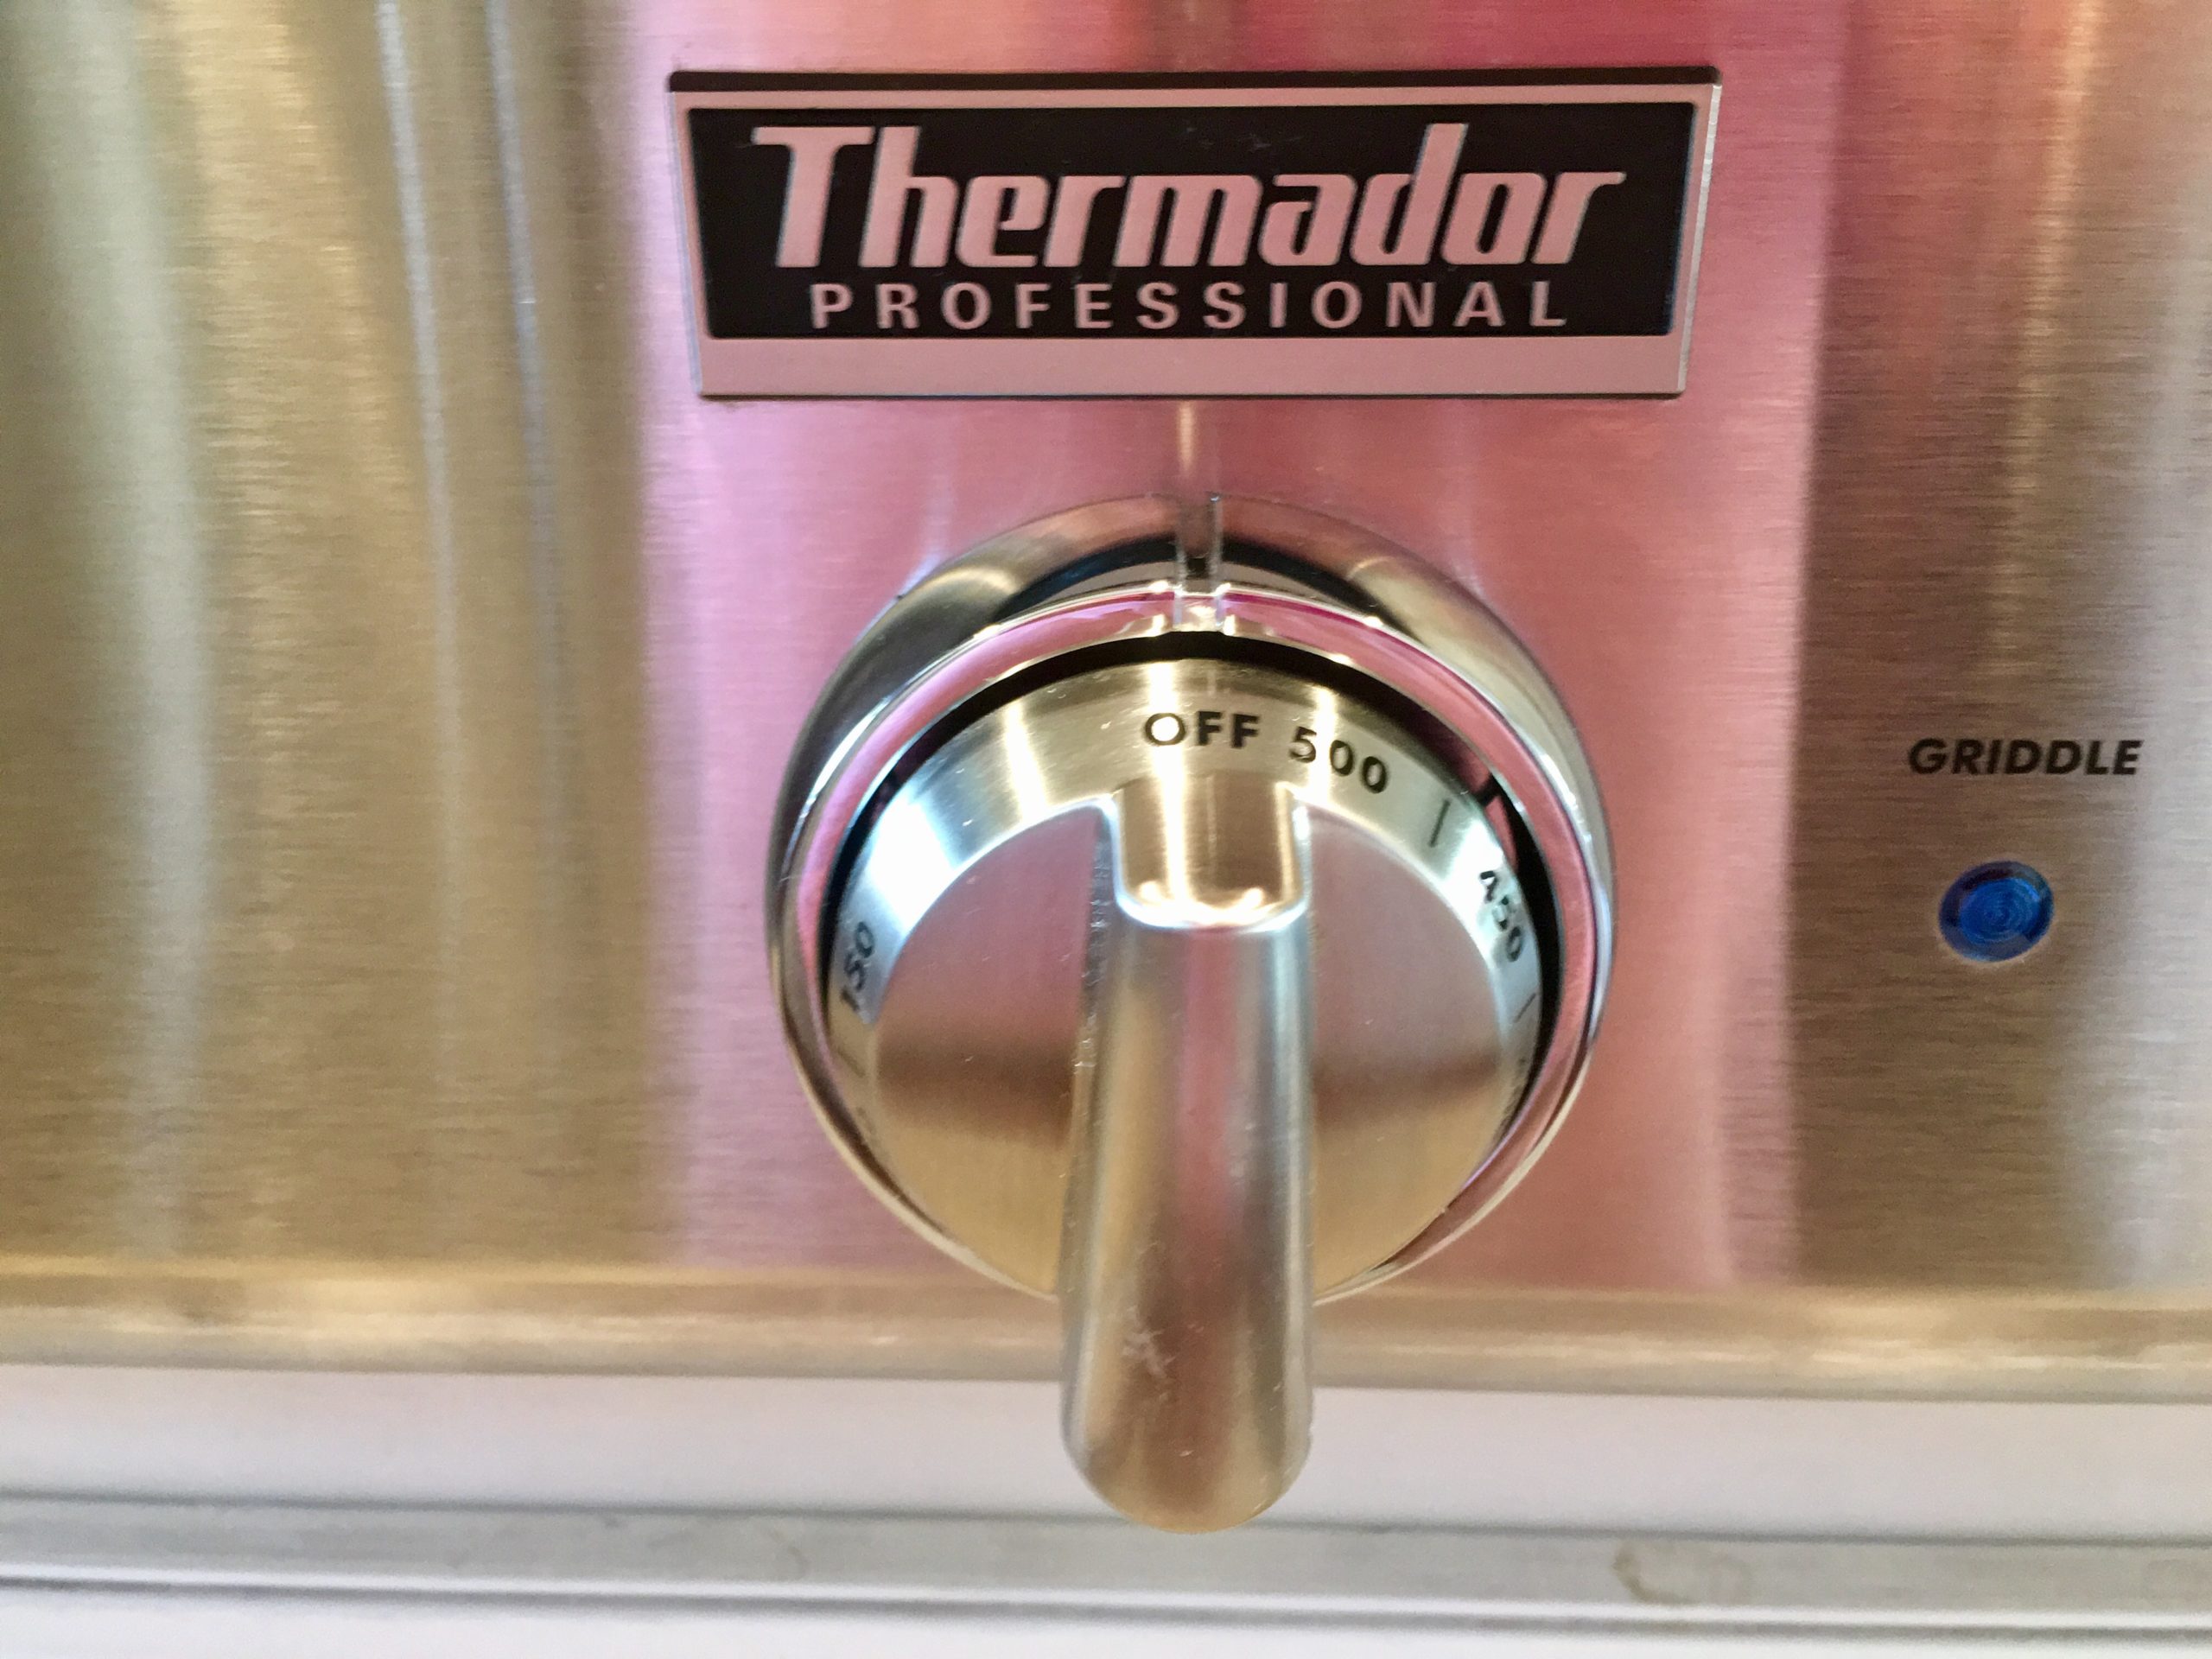 Thermador Professional knob.